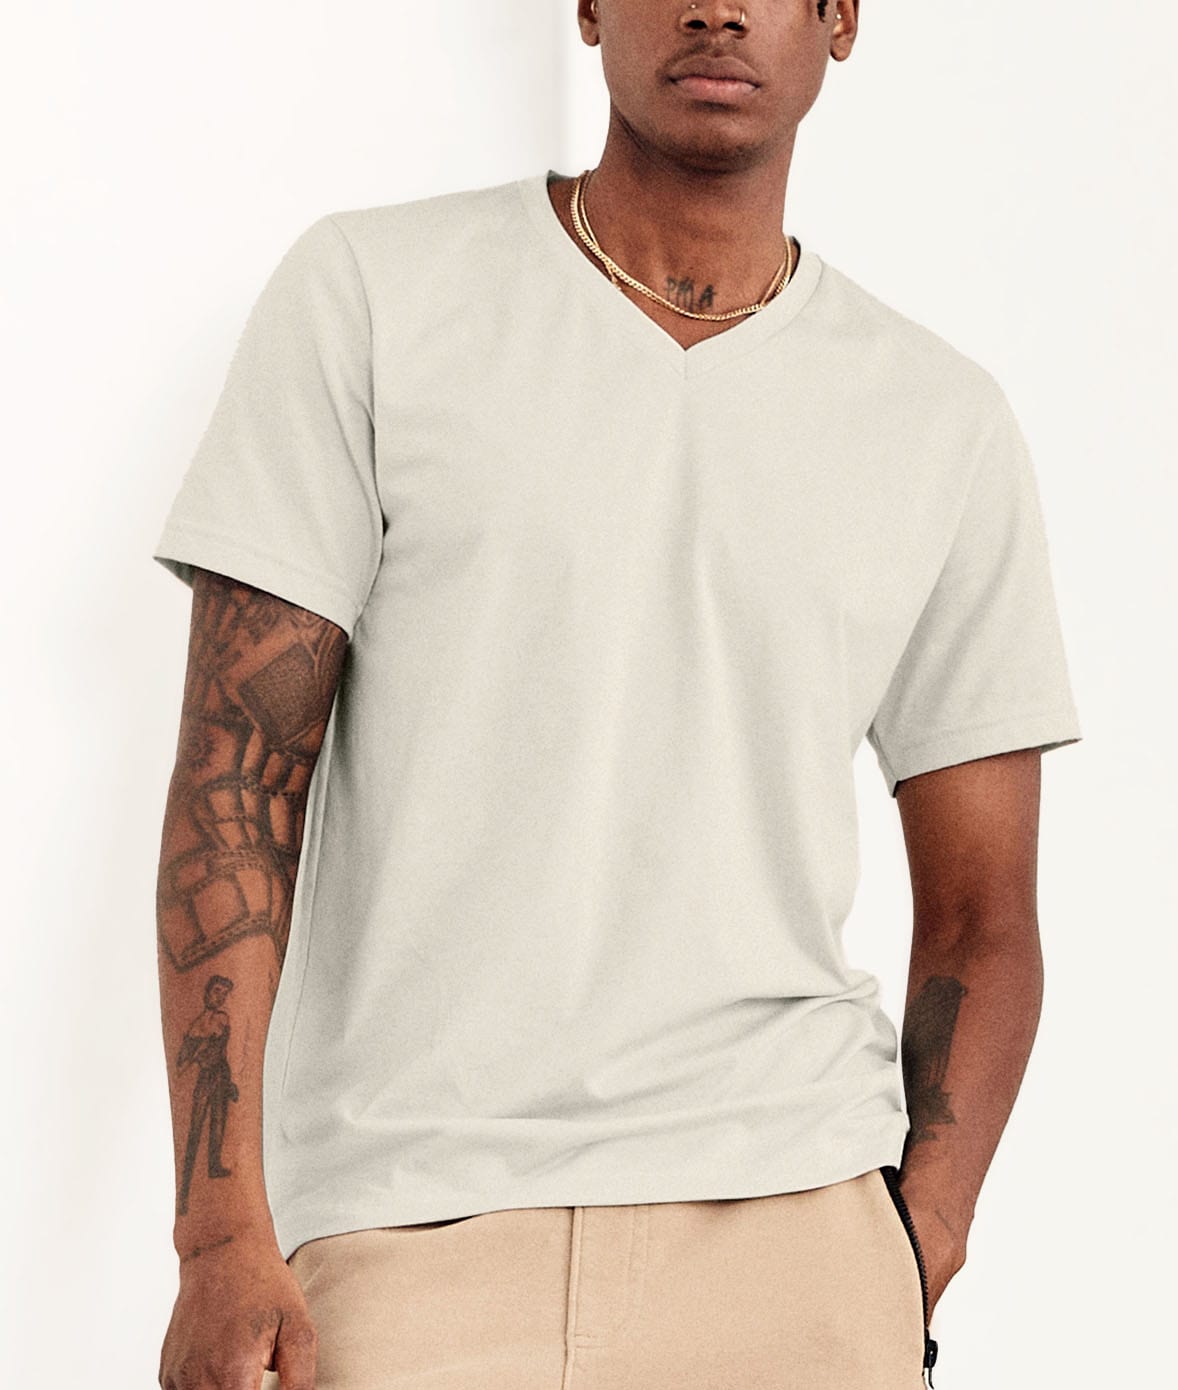 Men's Classic Cotton Short Sleeve V-Neck T-Shirt Worn by Model